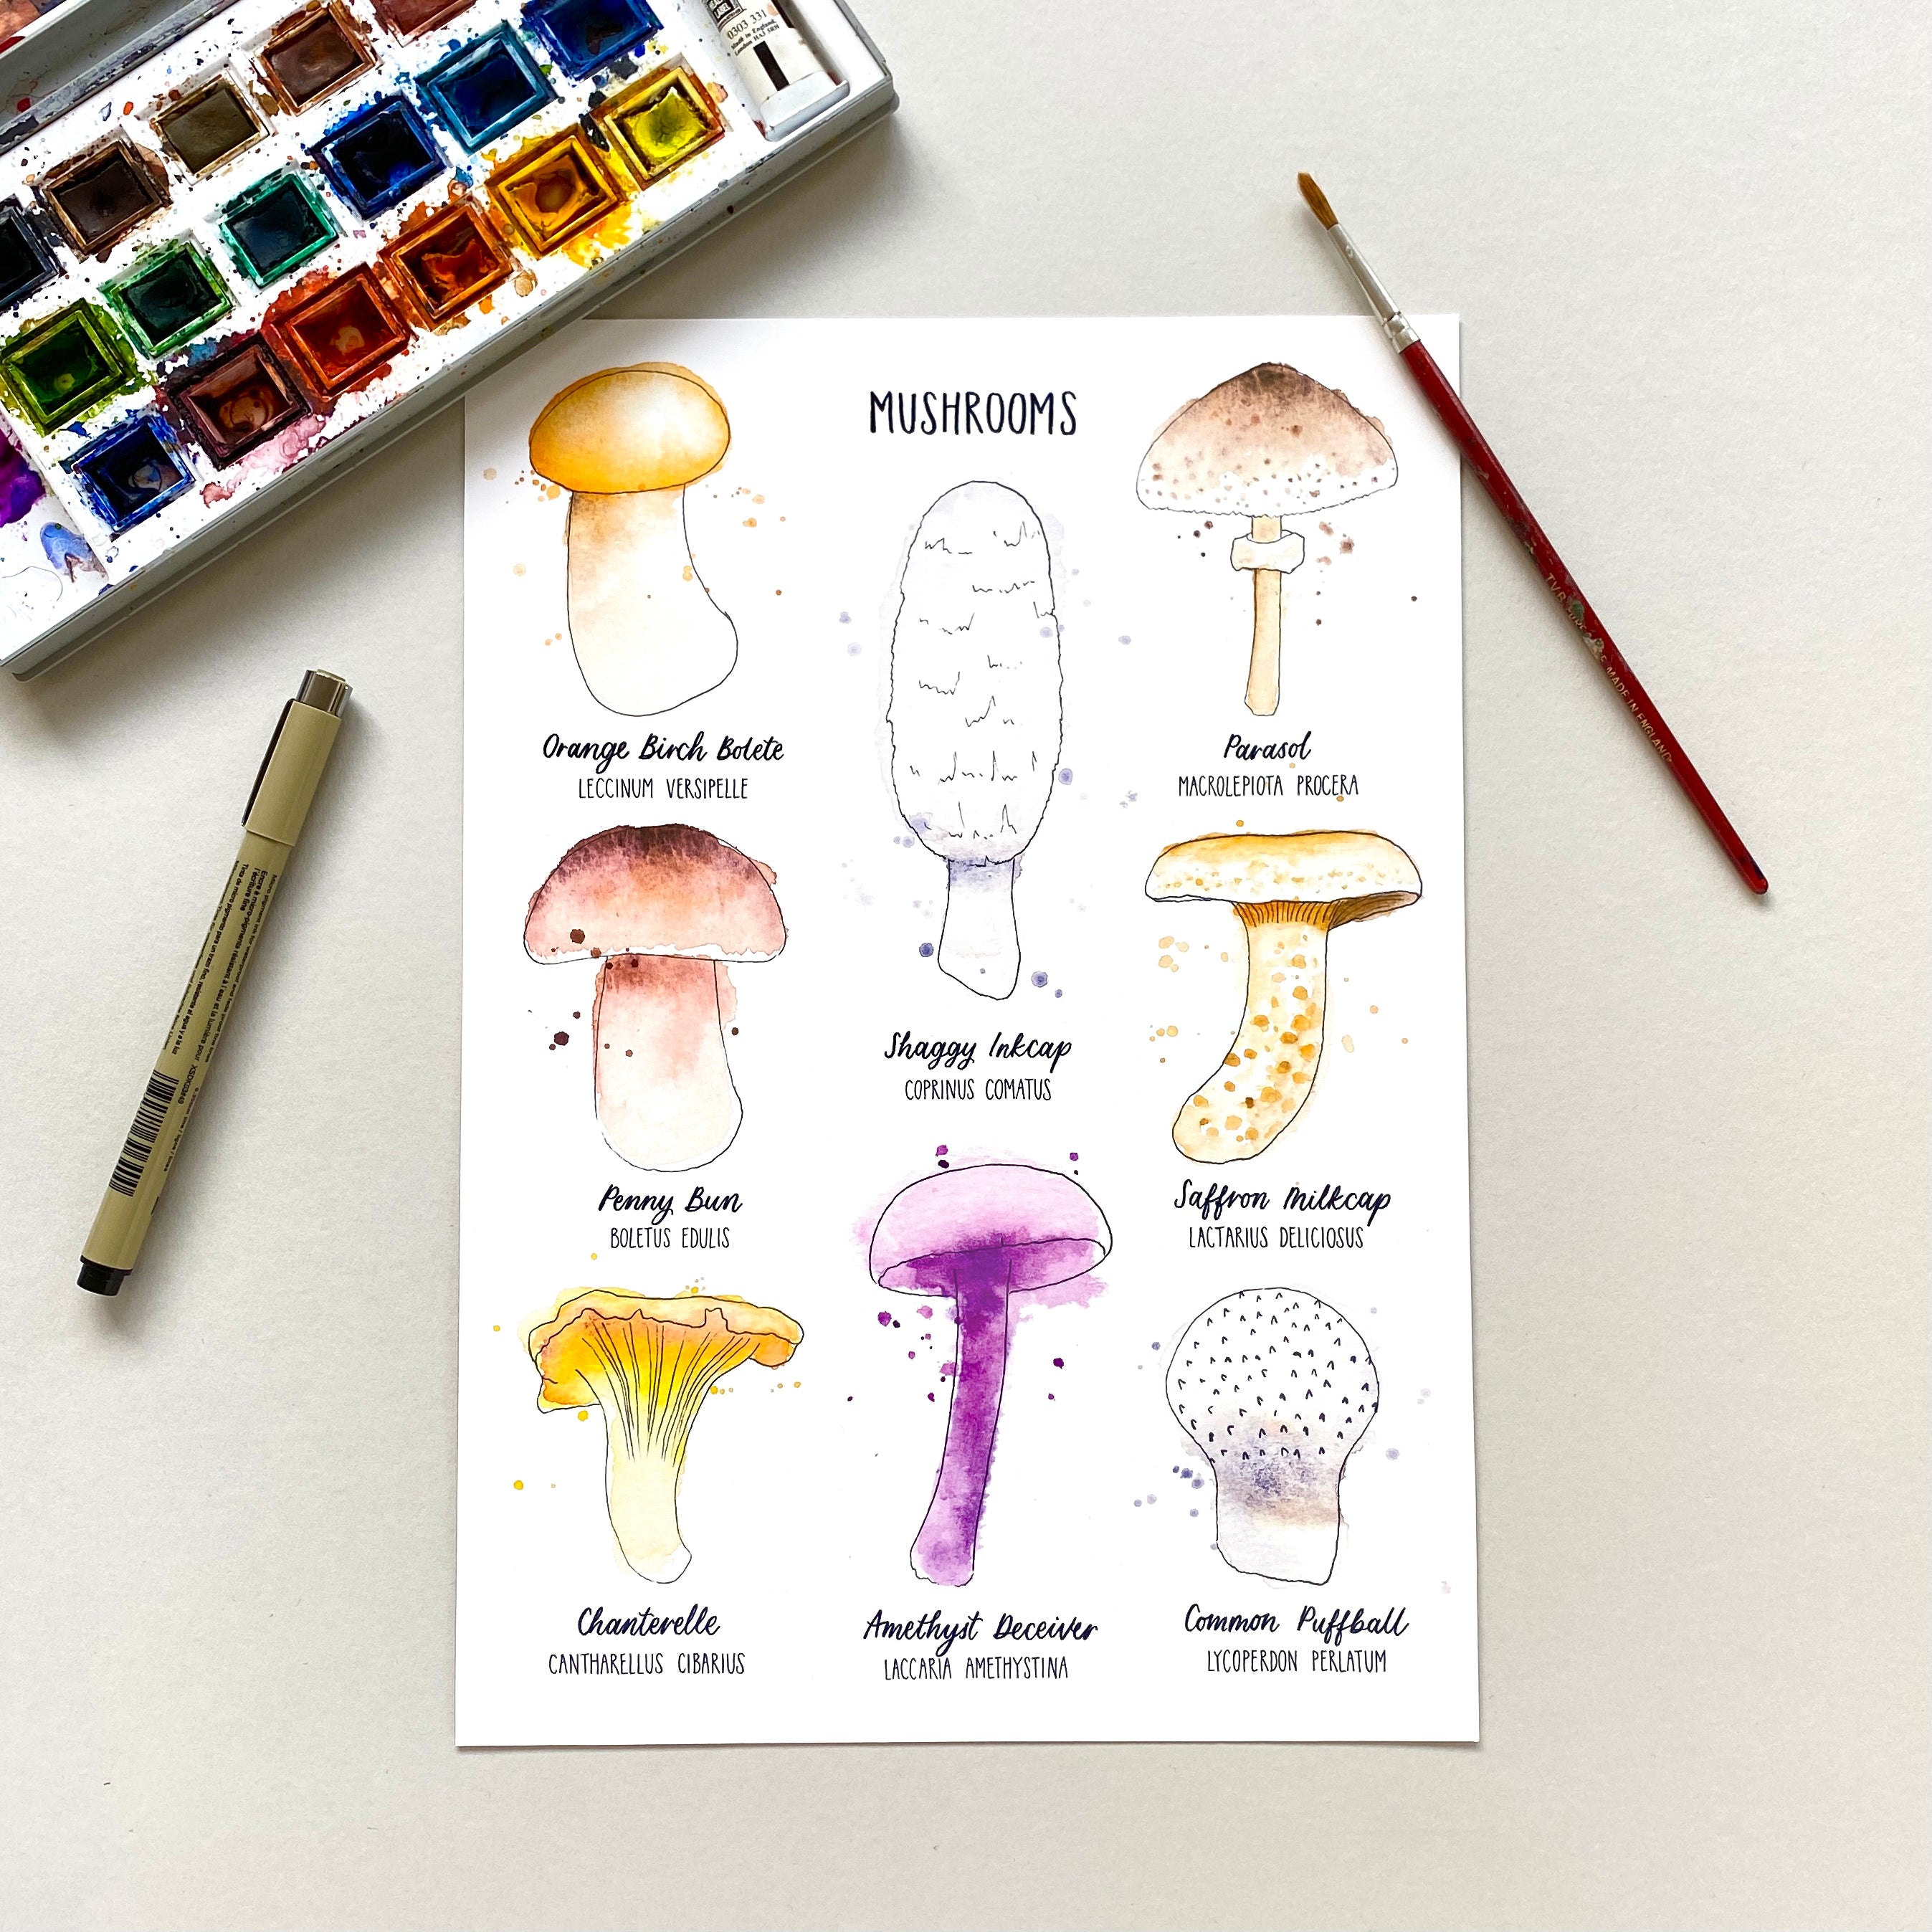 Mushrooms by Jules Birkby